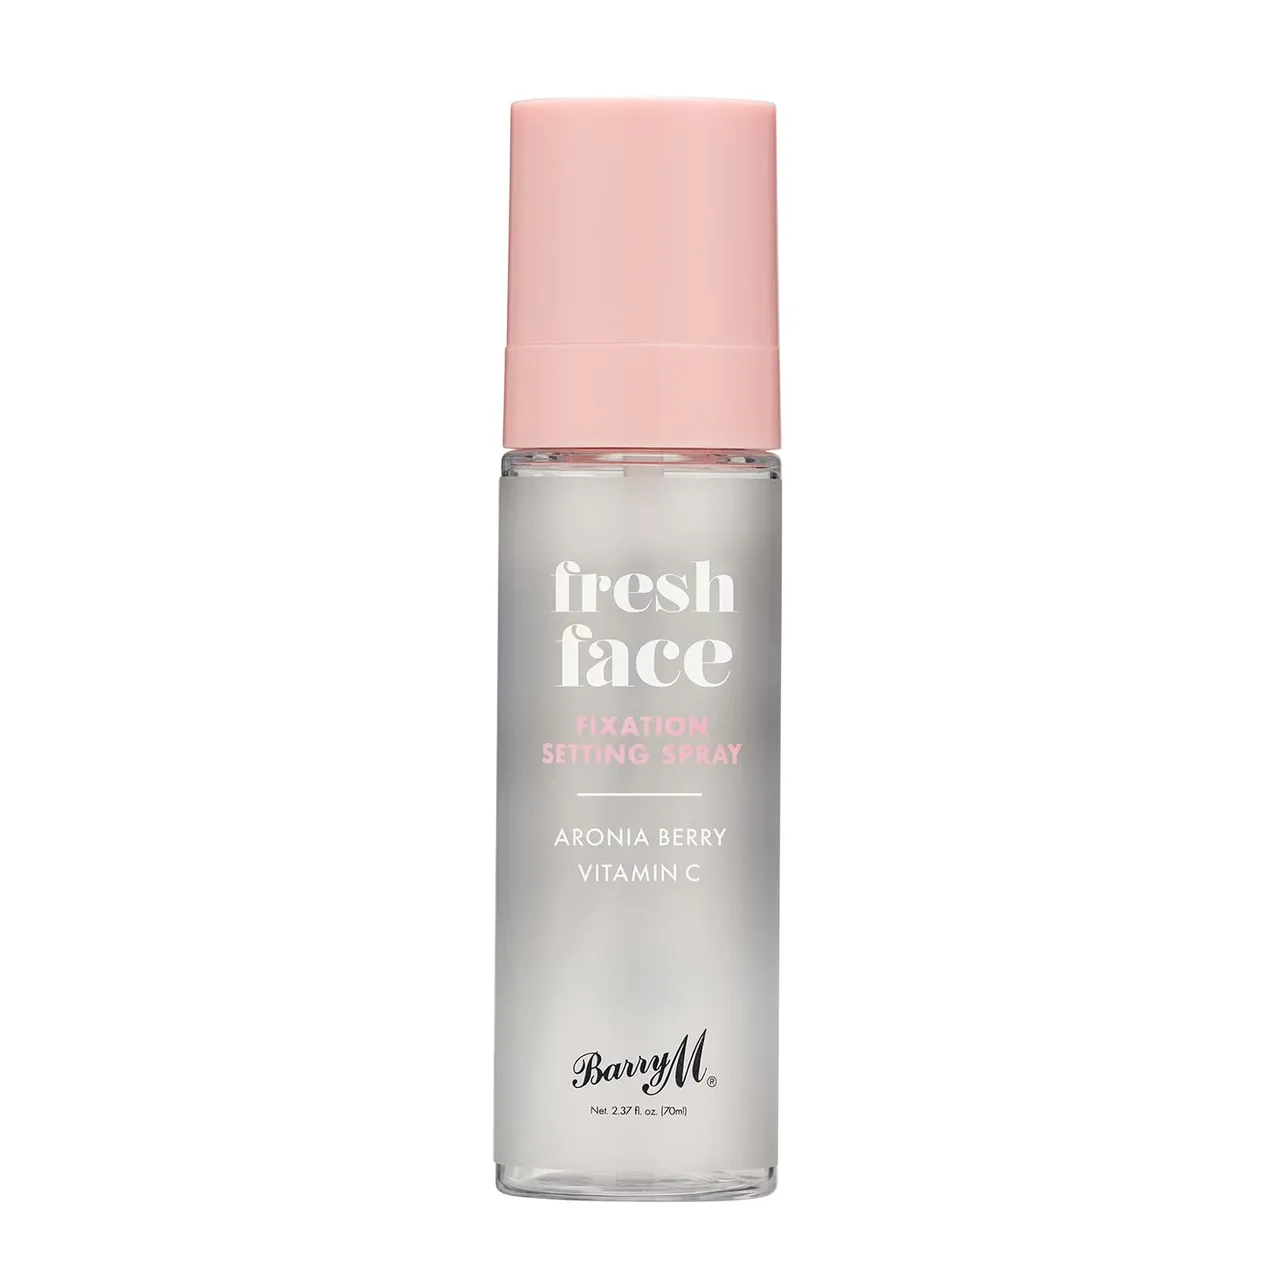 Barry M Fresh Face Fixation Makeup Setting Spray